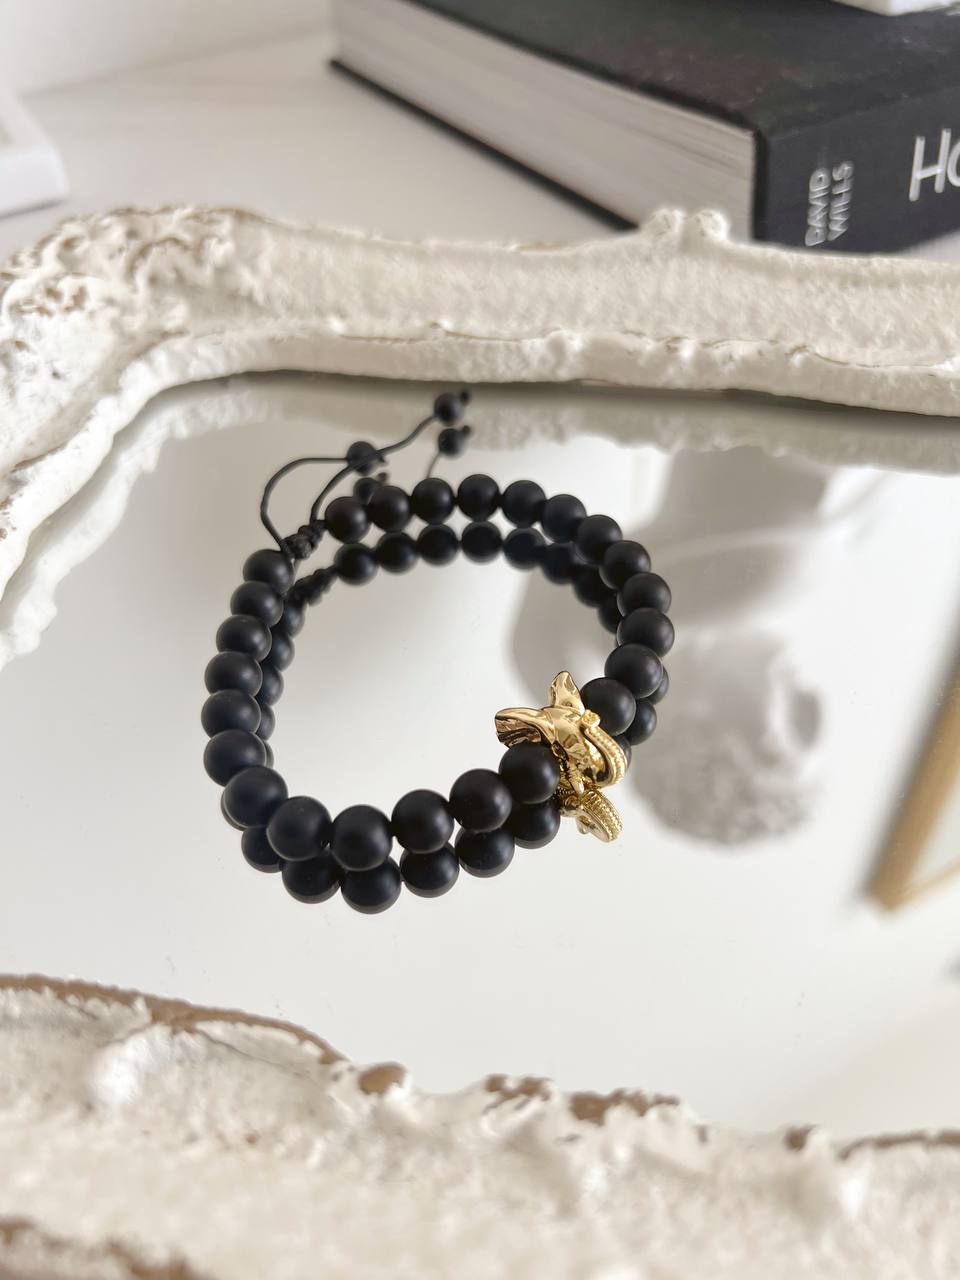 Black onyx men's bracelet with elephant charm